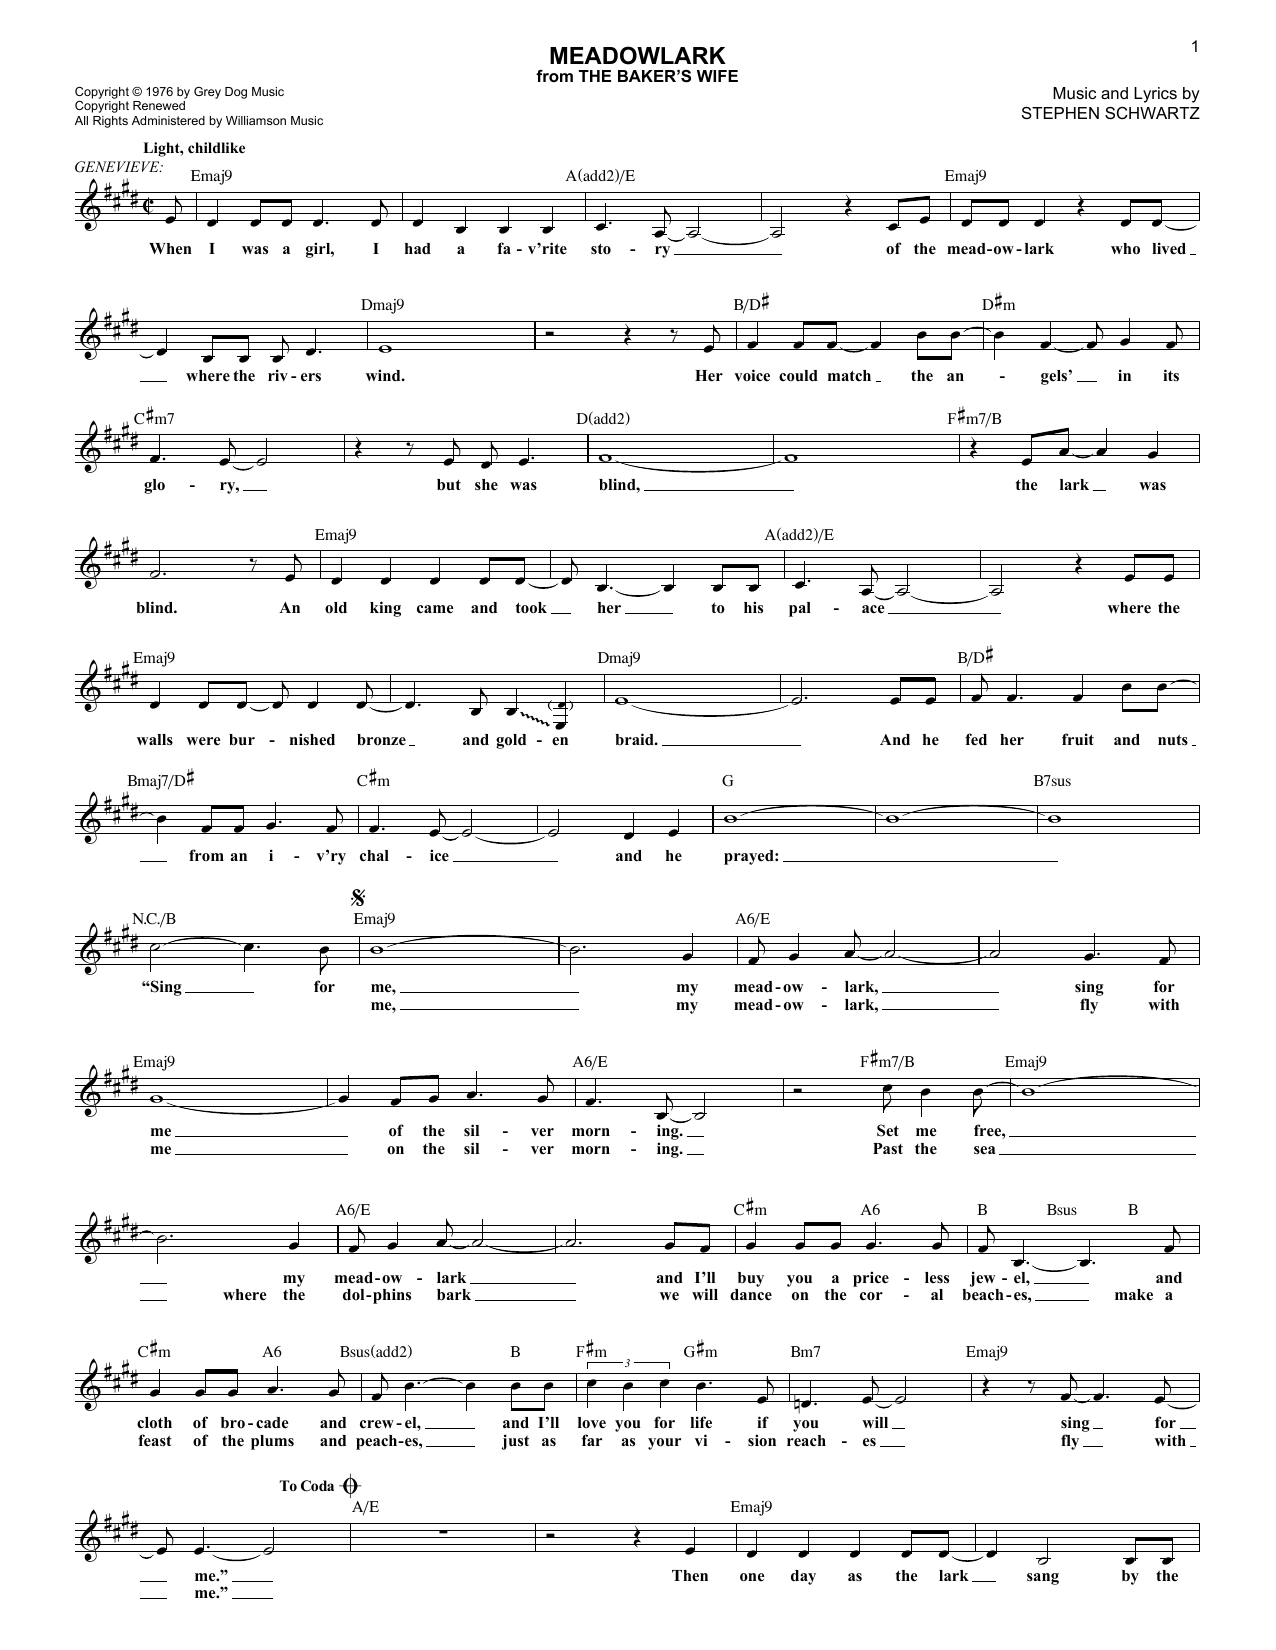 Stephen Schwartz Meadowlark Sheet Music Notes & Chords for Melody Line, Lyrics & Chords - Download or Print PDF